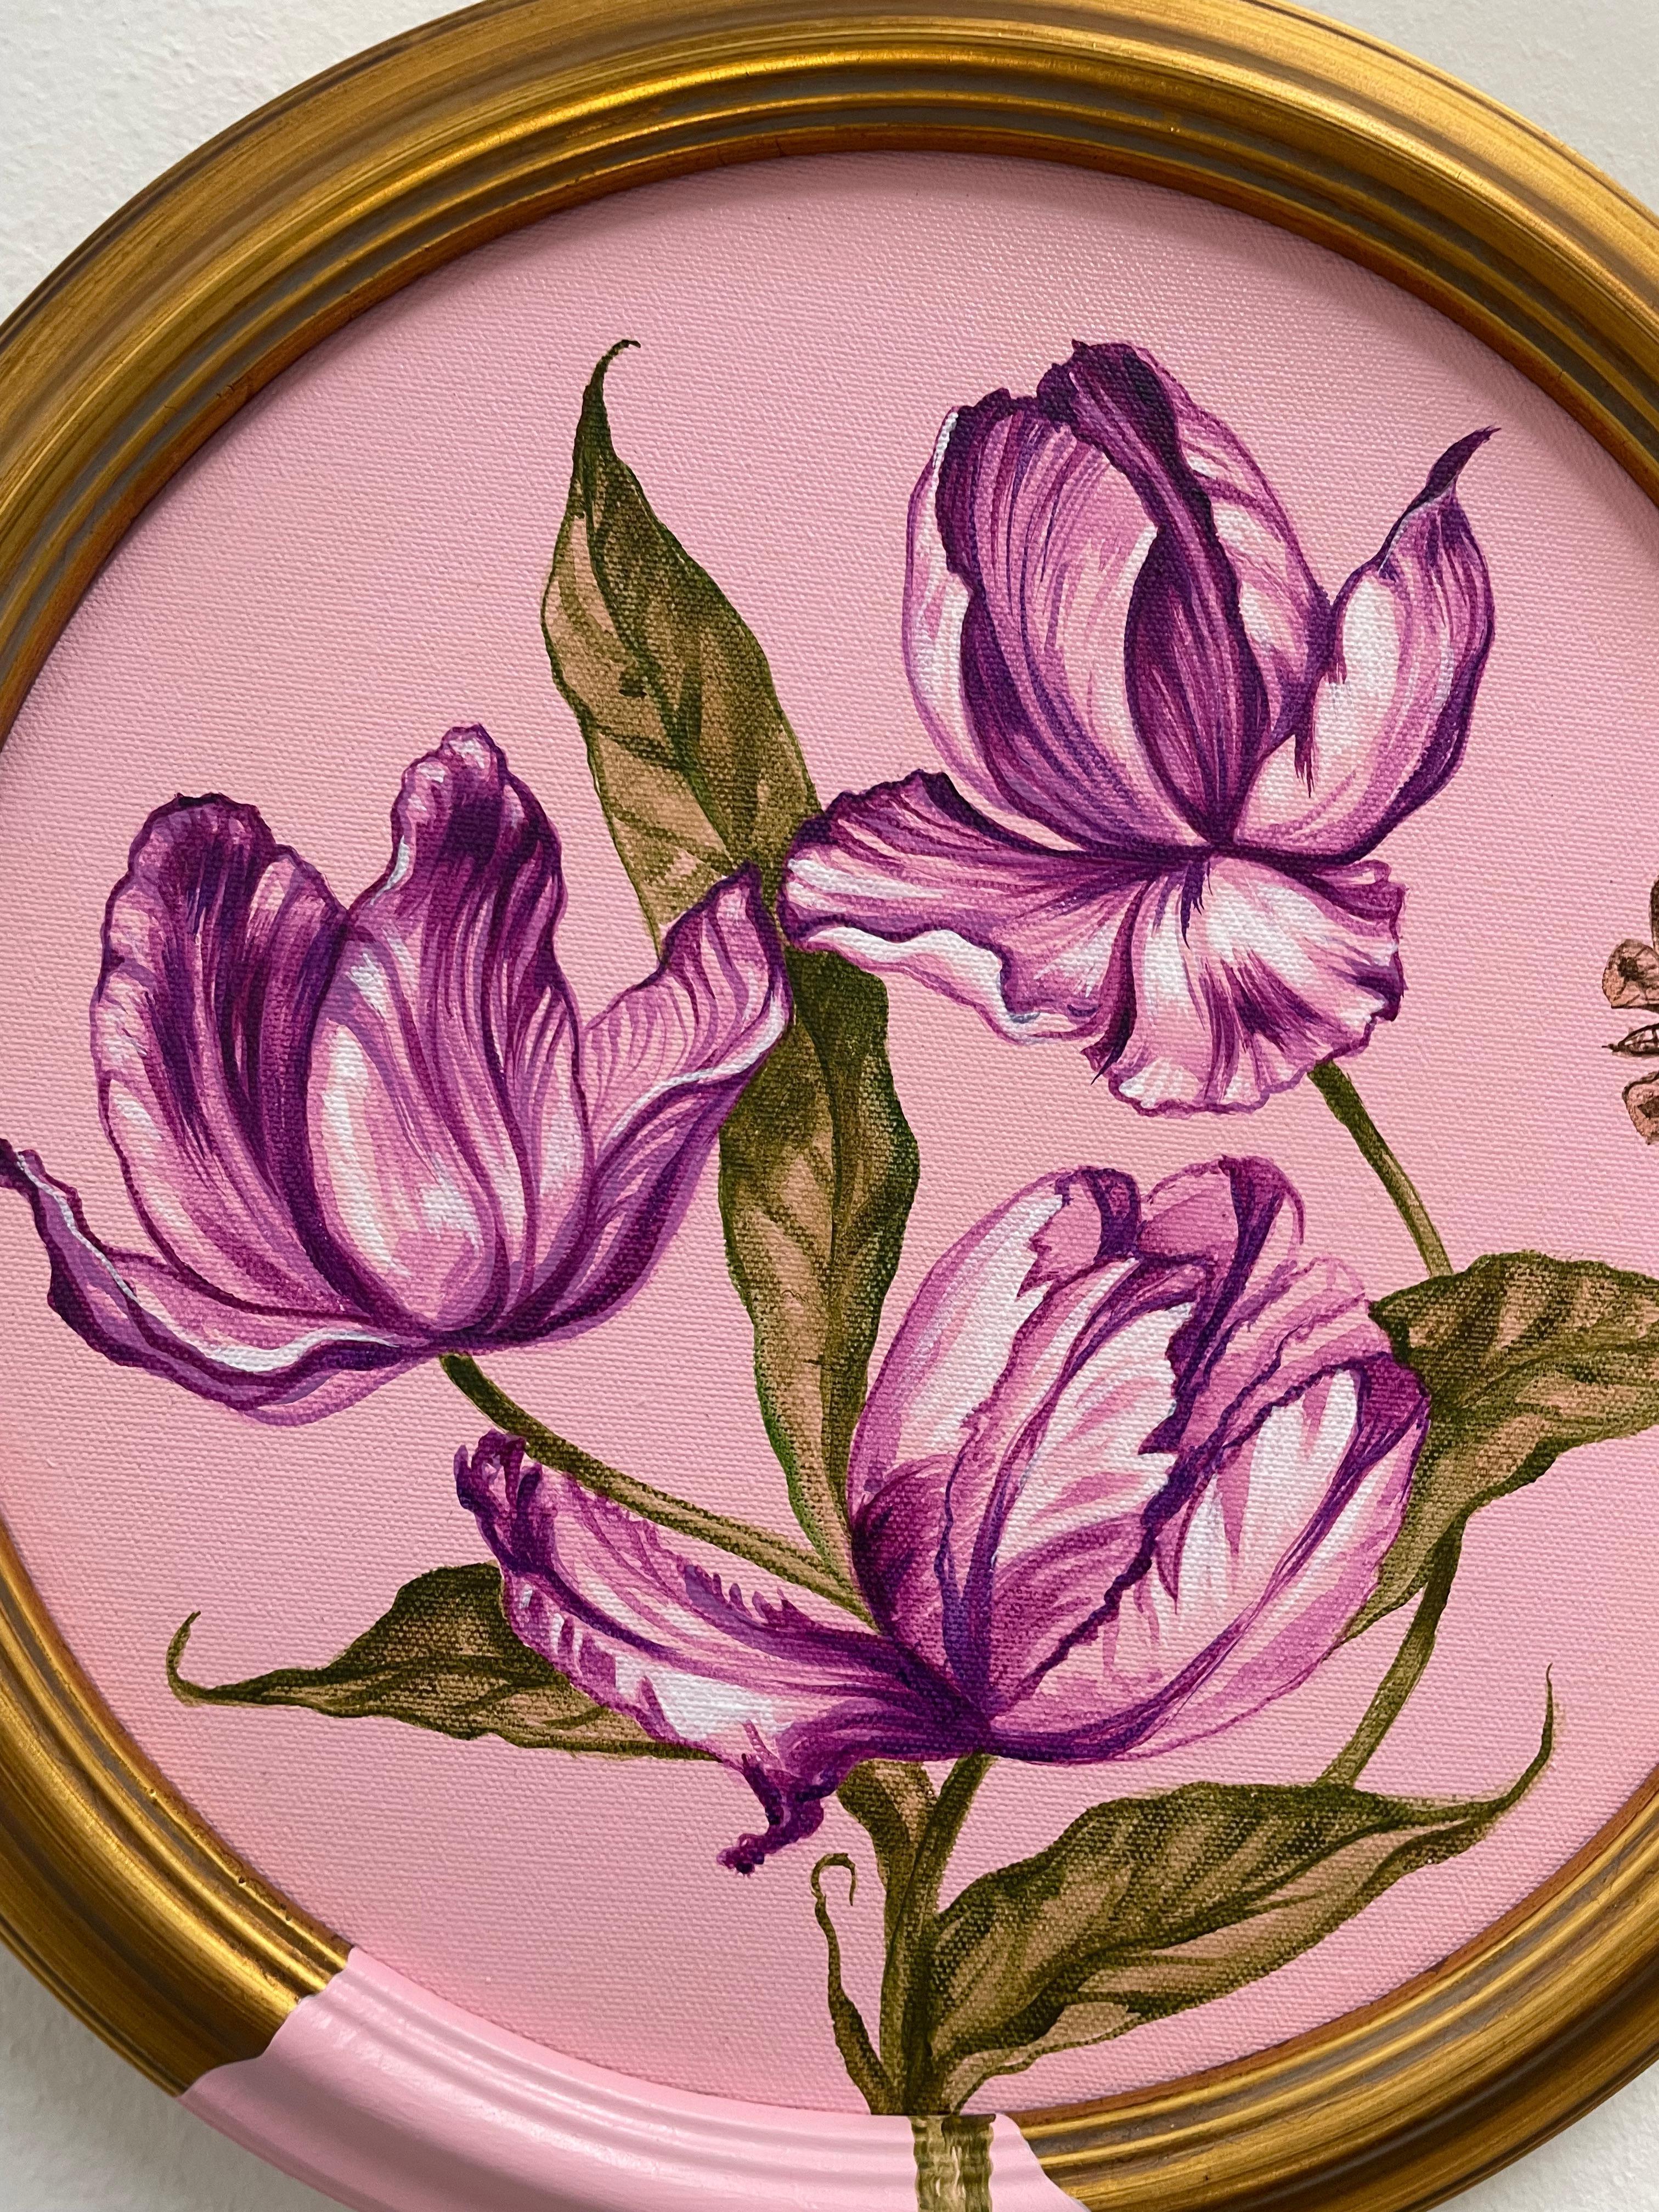 Rose Tulips - Painting by Carlos Gamez De Francisco